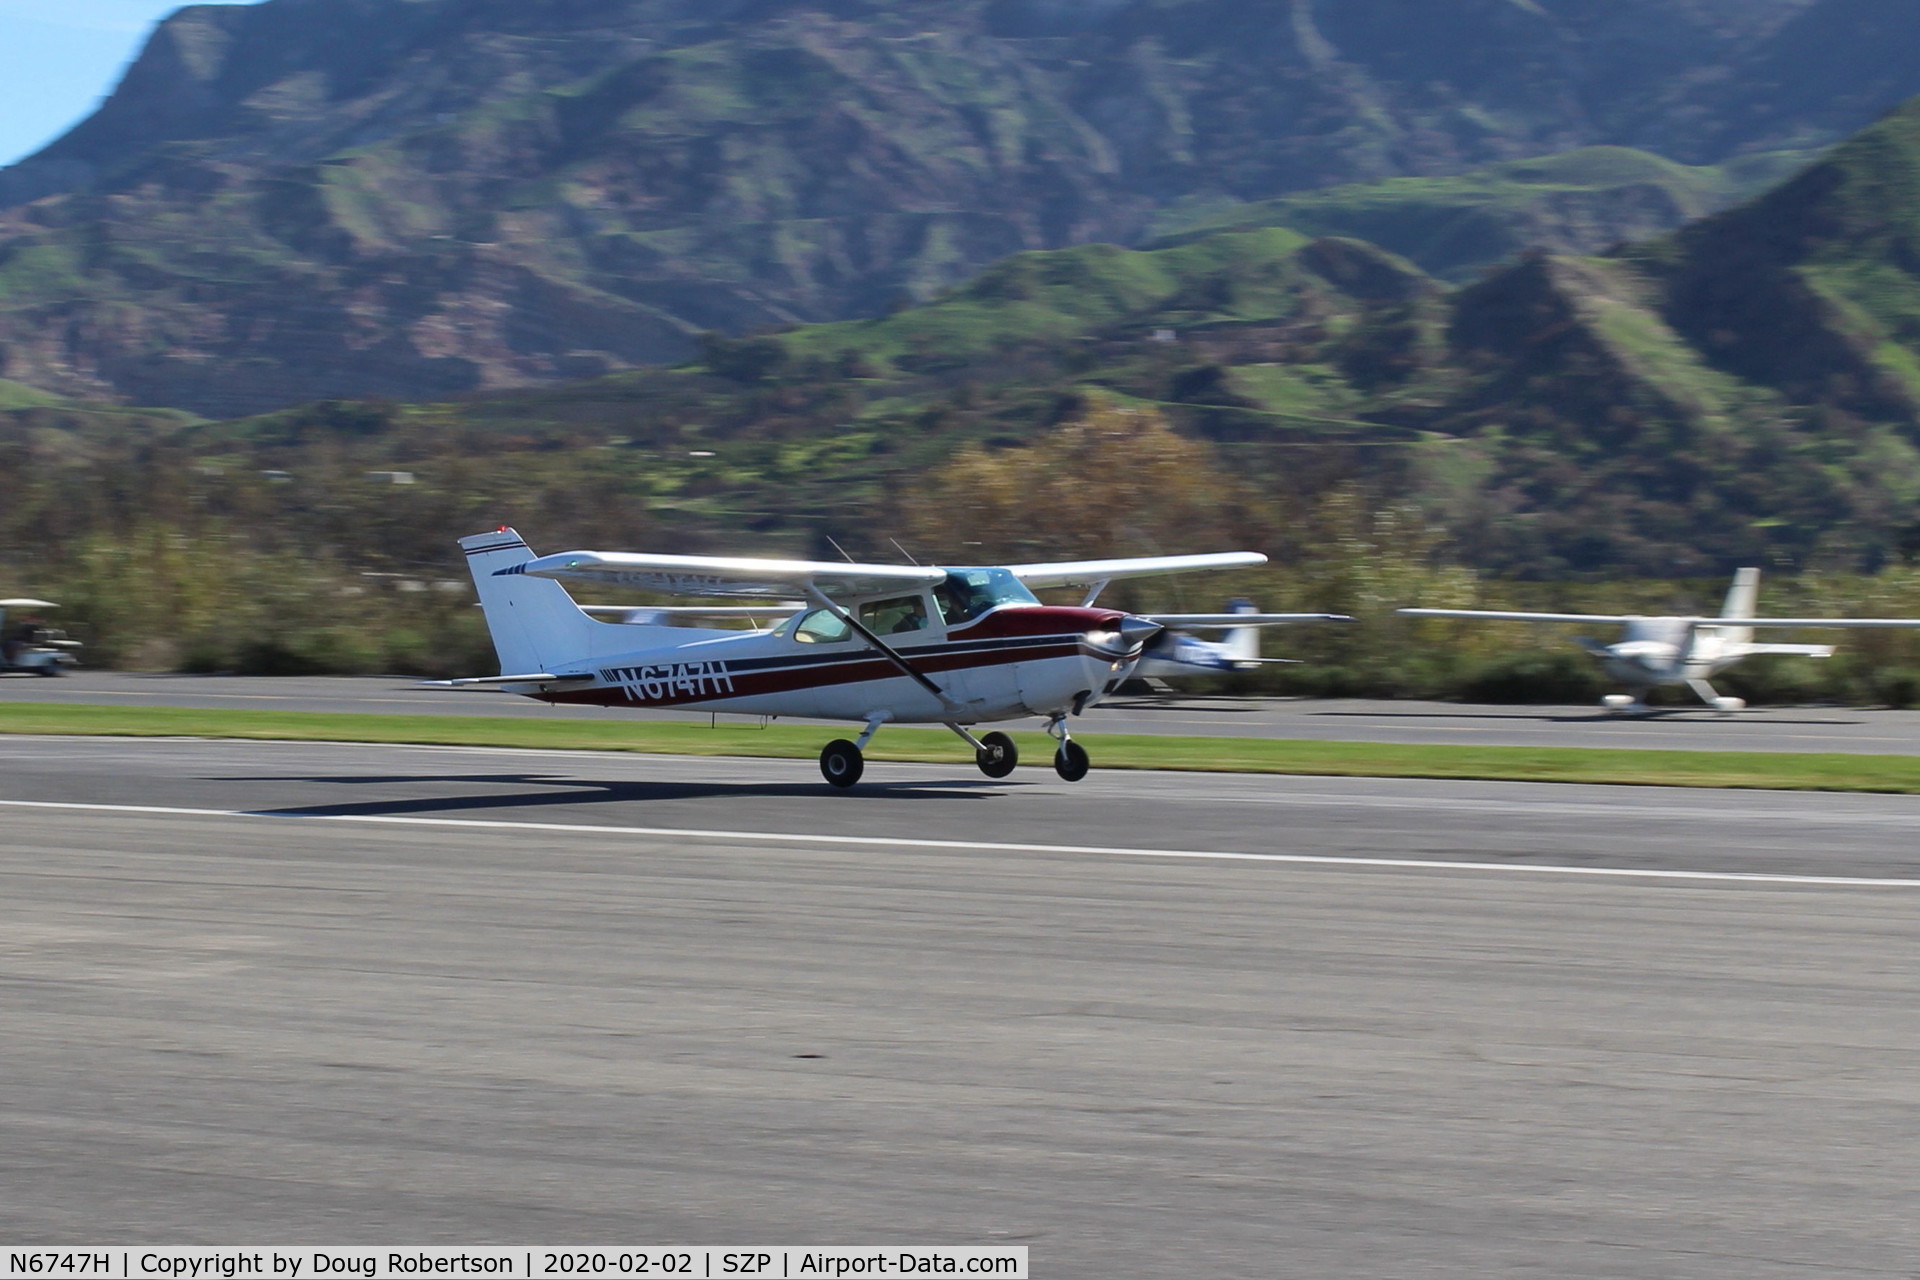 N6747H, 1975 Cessna 172M C/N 17265564, 1975 Cessna 172M SKYHAWK, Lycoming O-320-E2D 150 Hp, takeoff roll Rwy 22